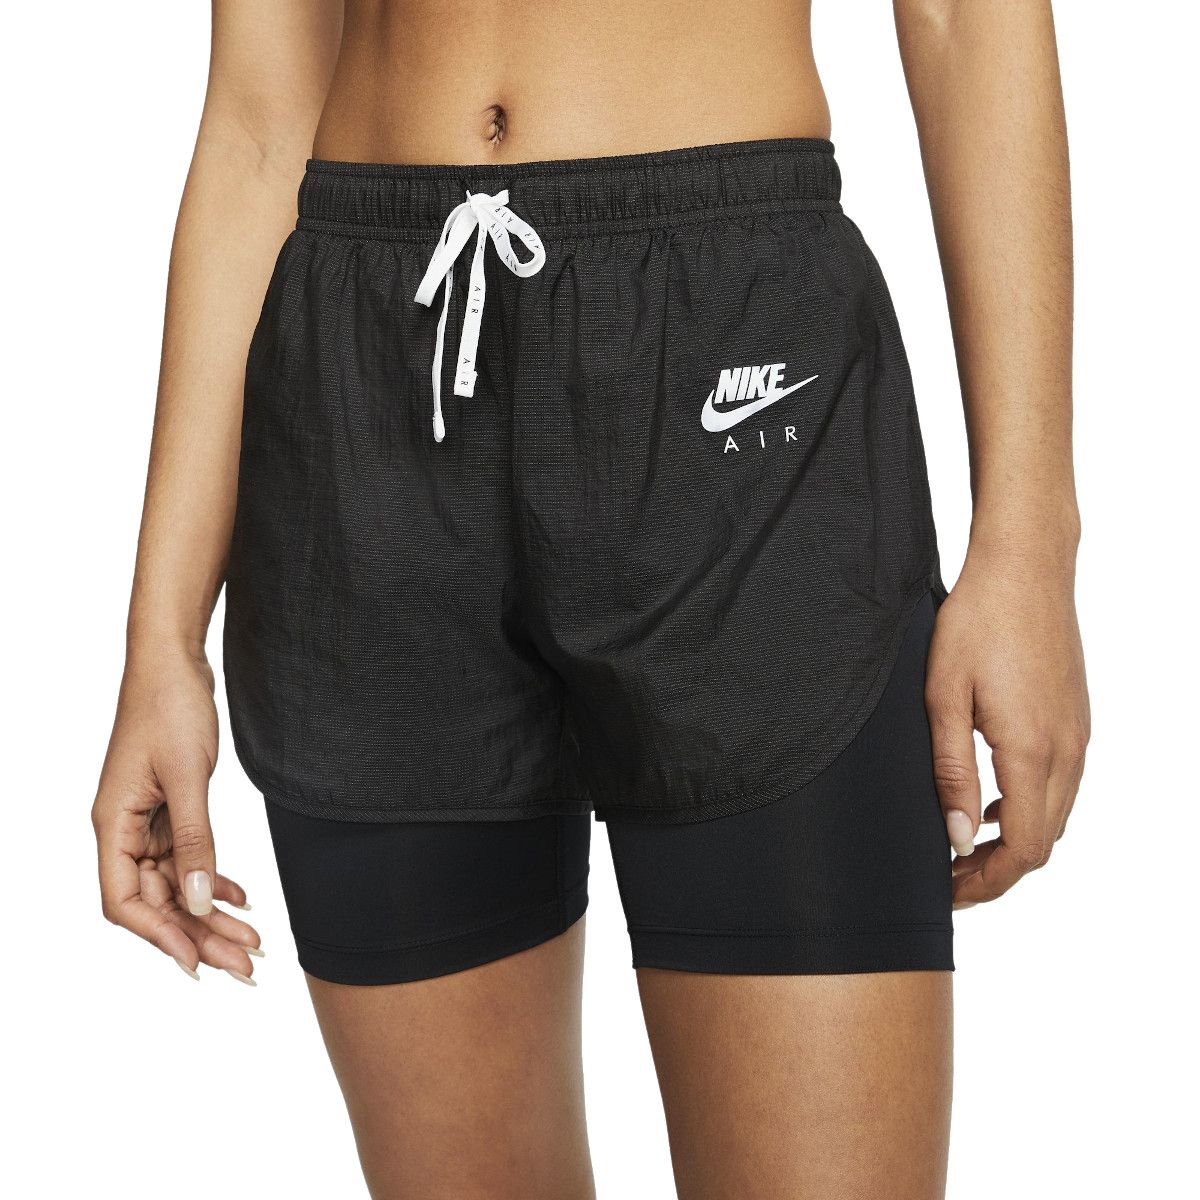 Nike Air 2-in-1 Women's Running Shorts CJ2154-011